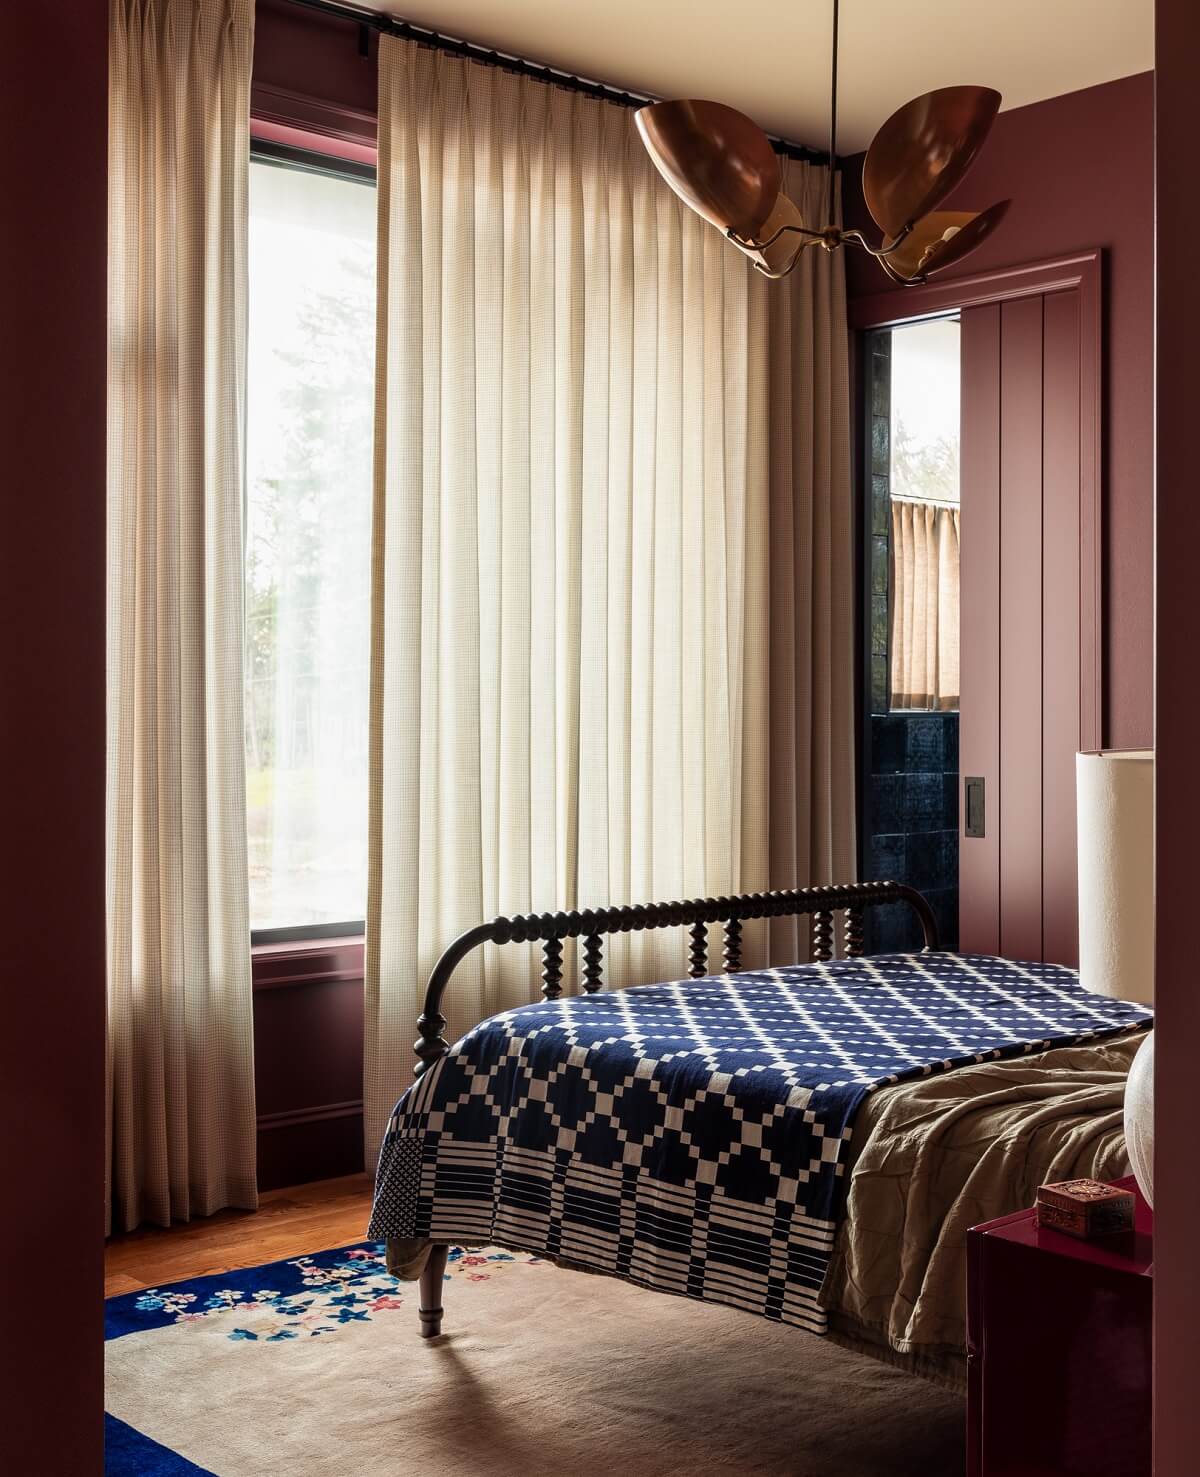 aubergine-wall-color-bedroom-Heidi-Caillier-Design-nordroom